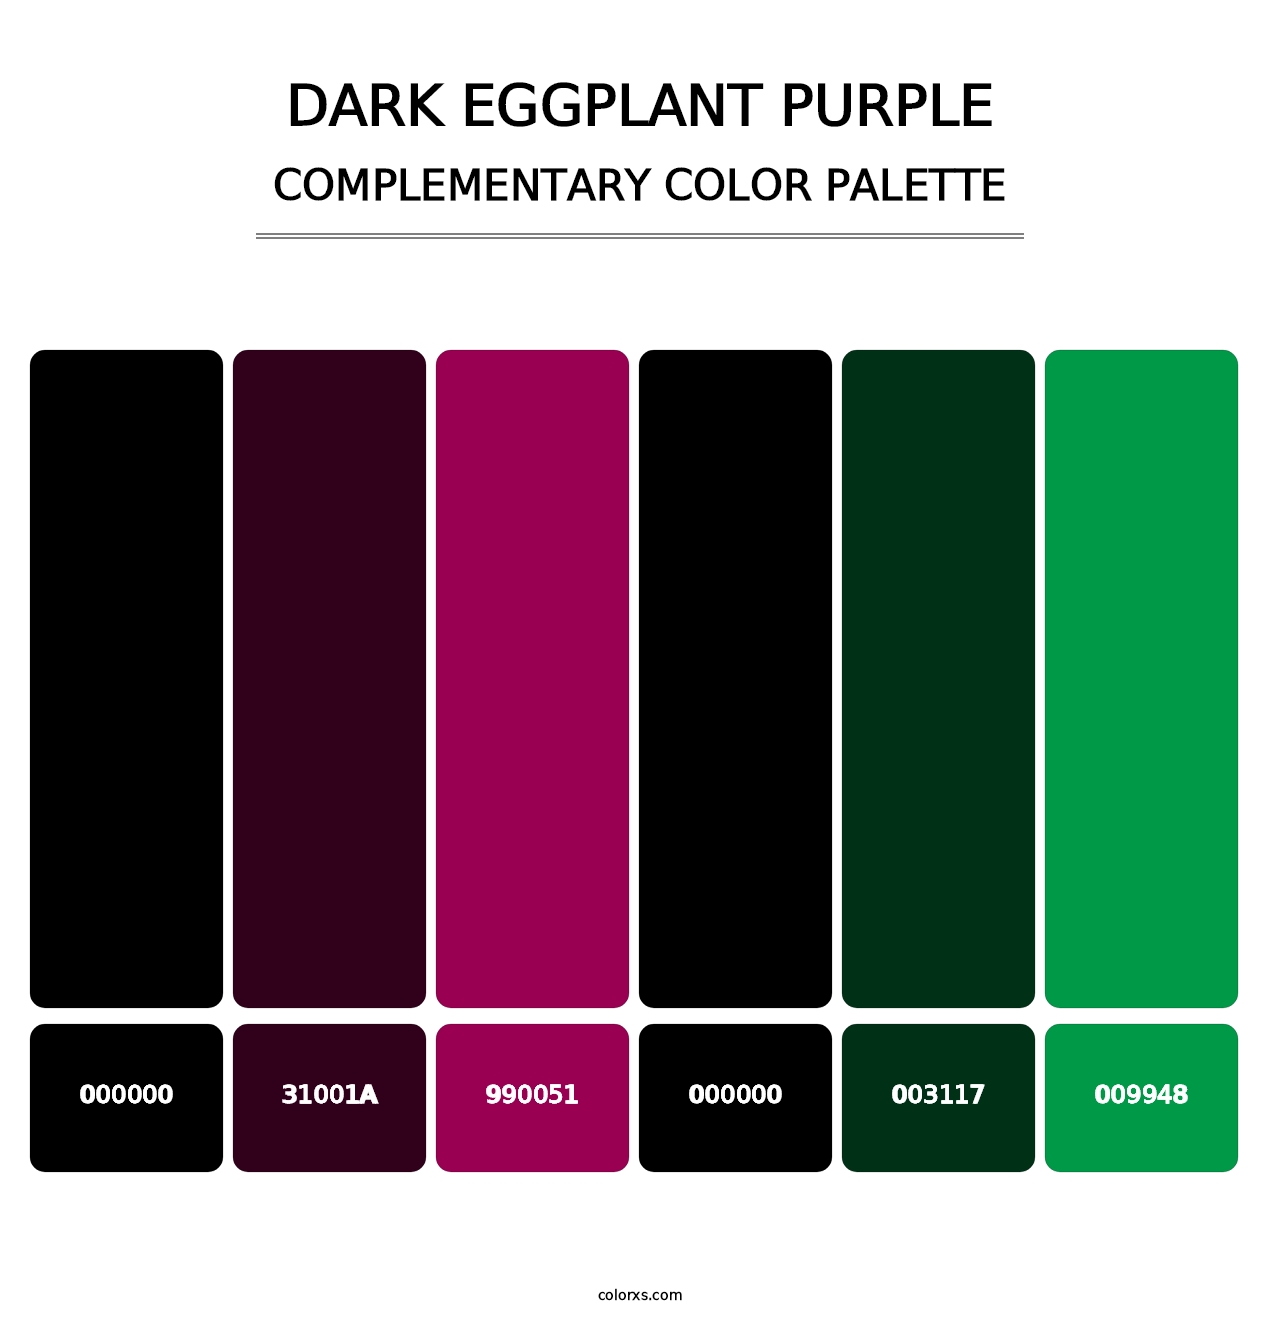 Dark Eggplant Purple - Complementary Color Palette